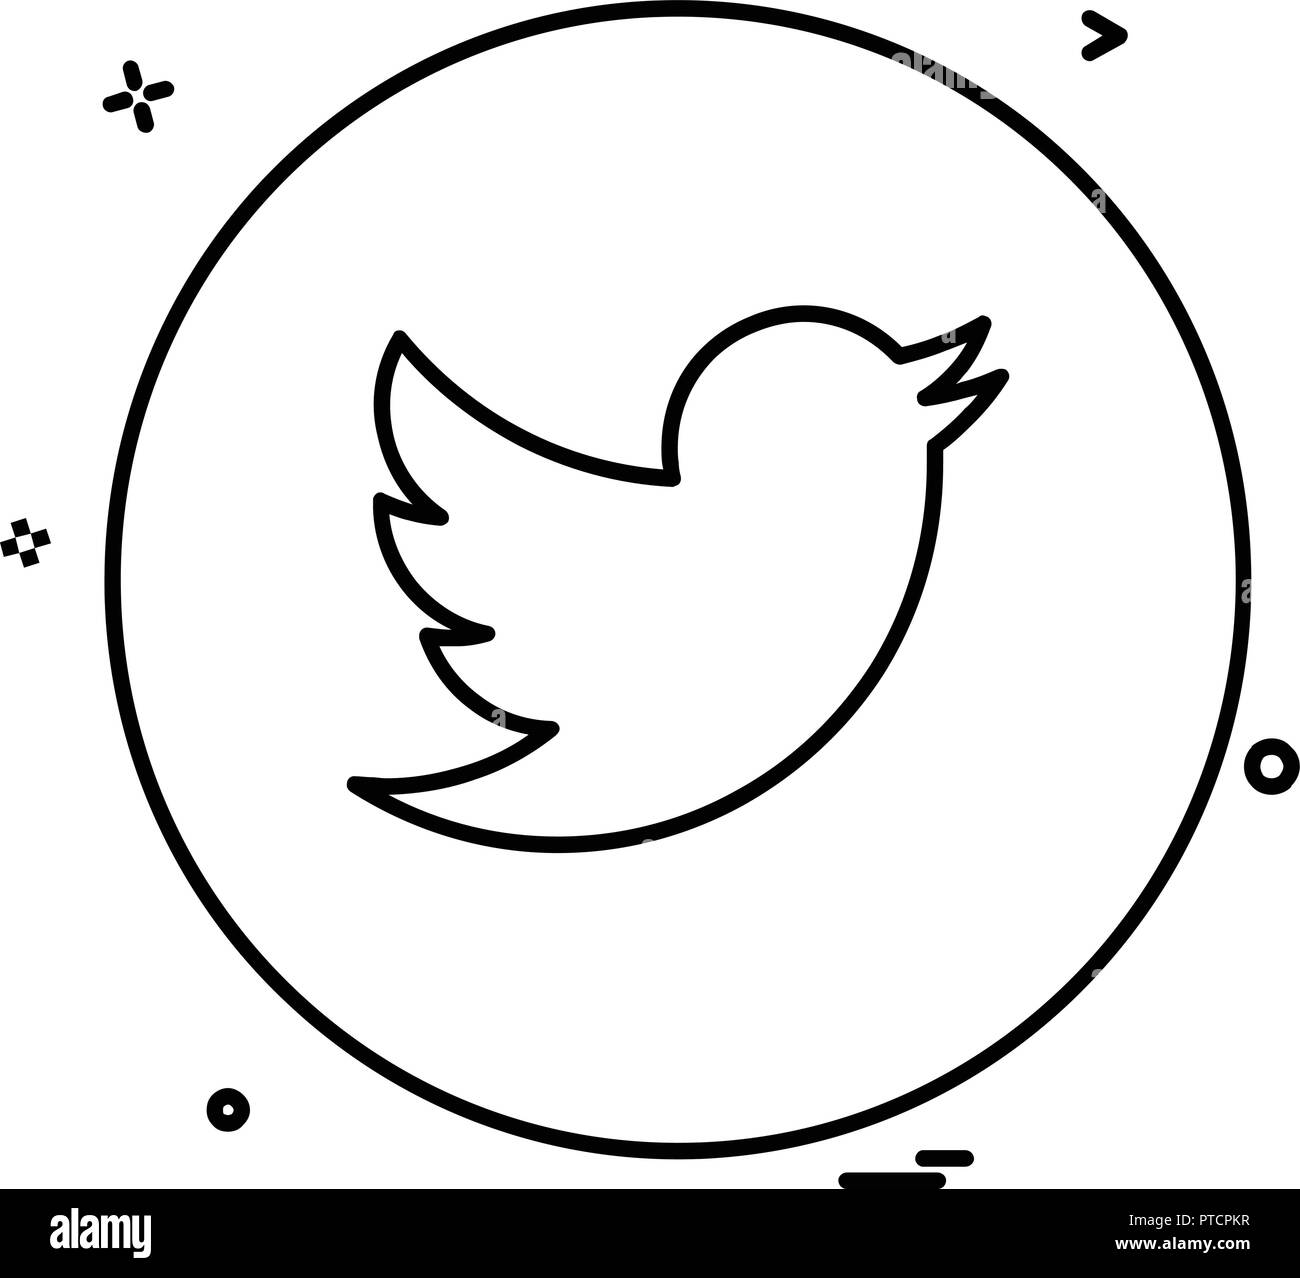 Cartoon Network Logo Black And White Stock Photos Images Alamy